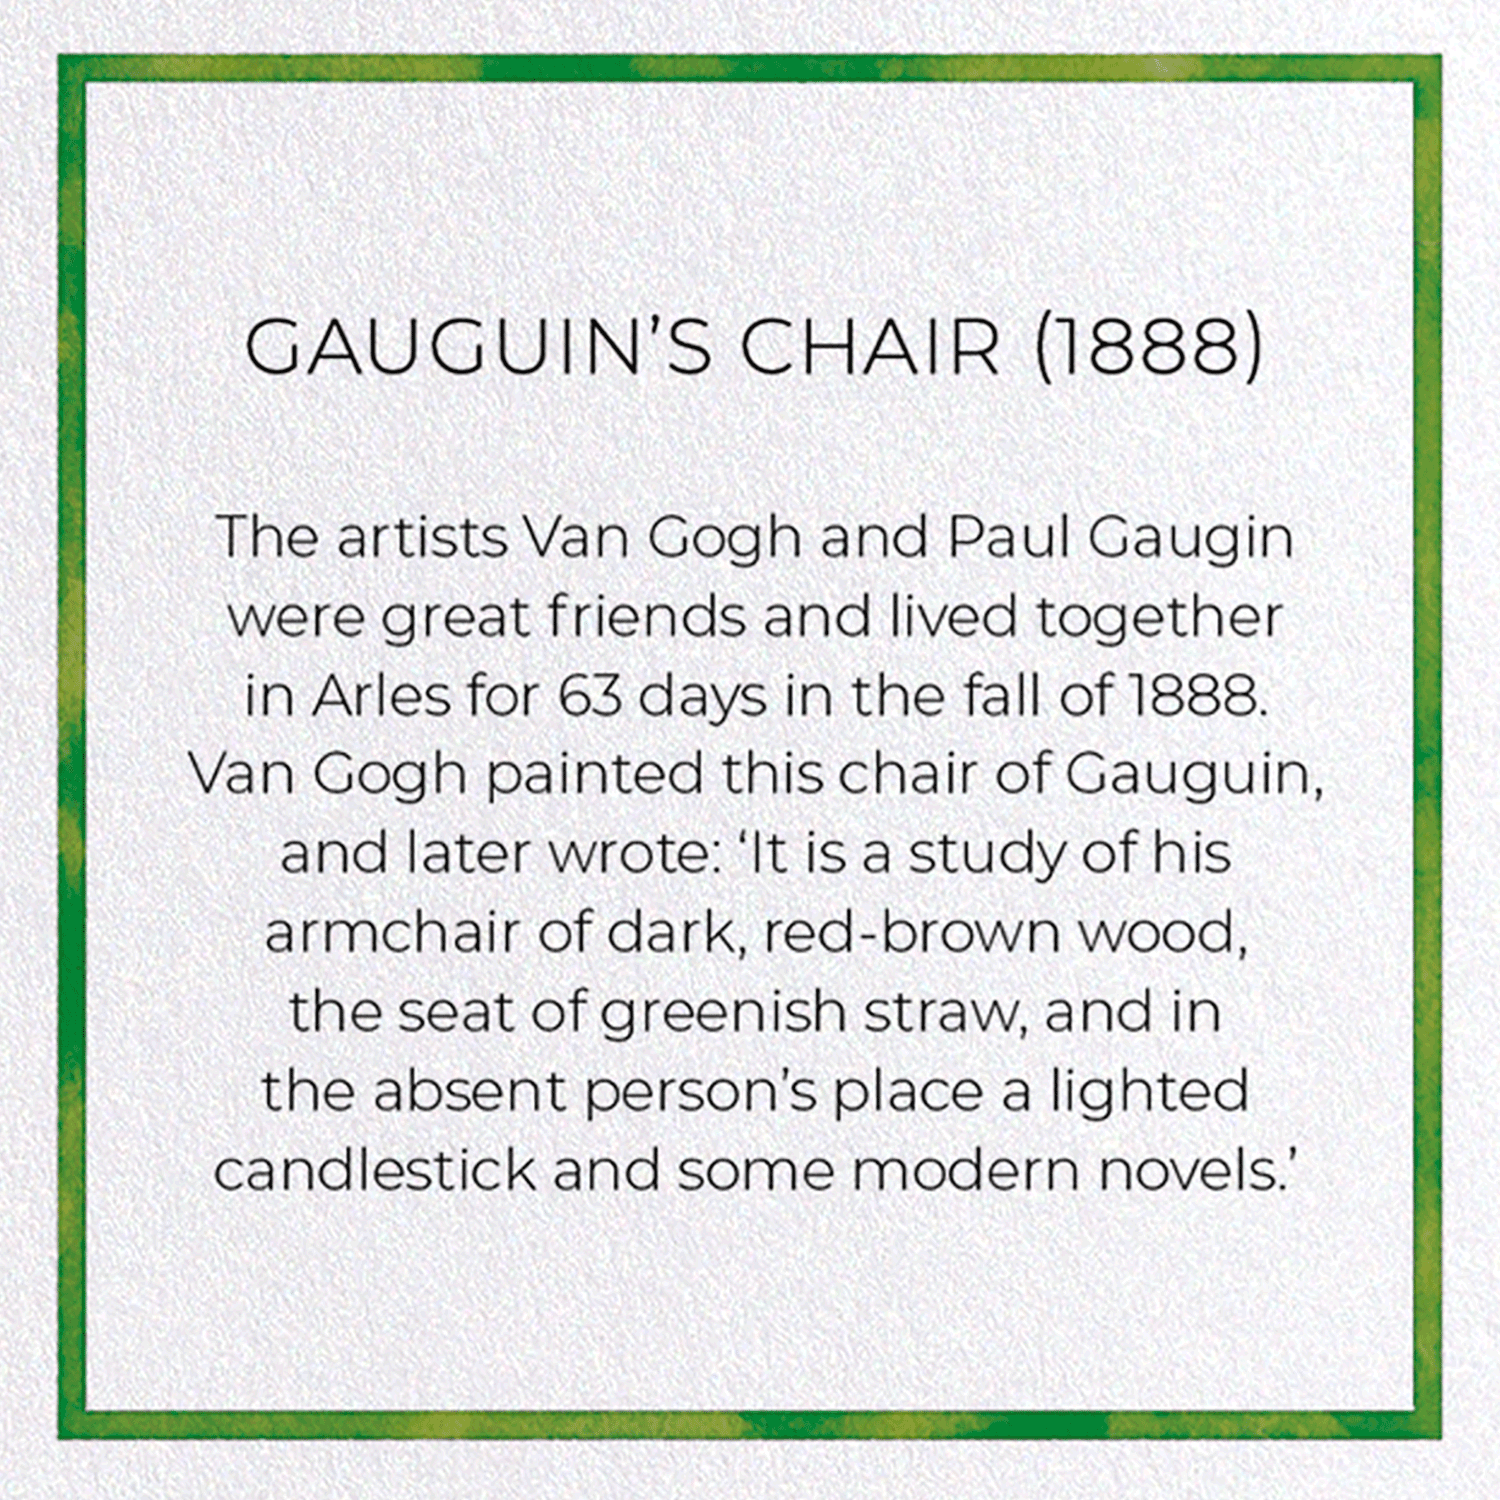 GAUGUIN'S CHAIR (1888)